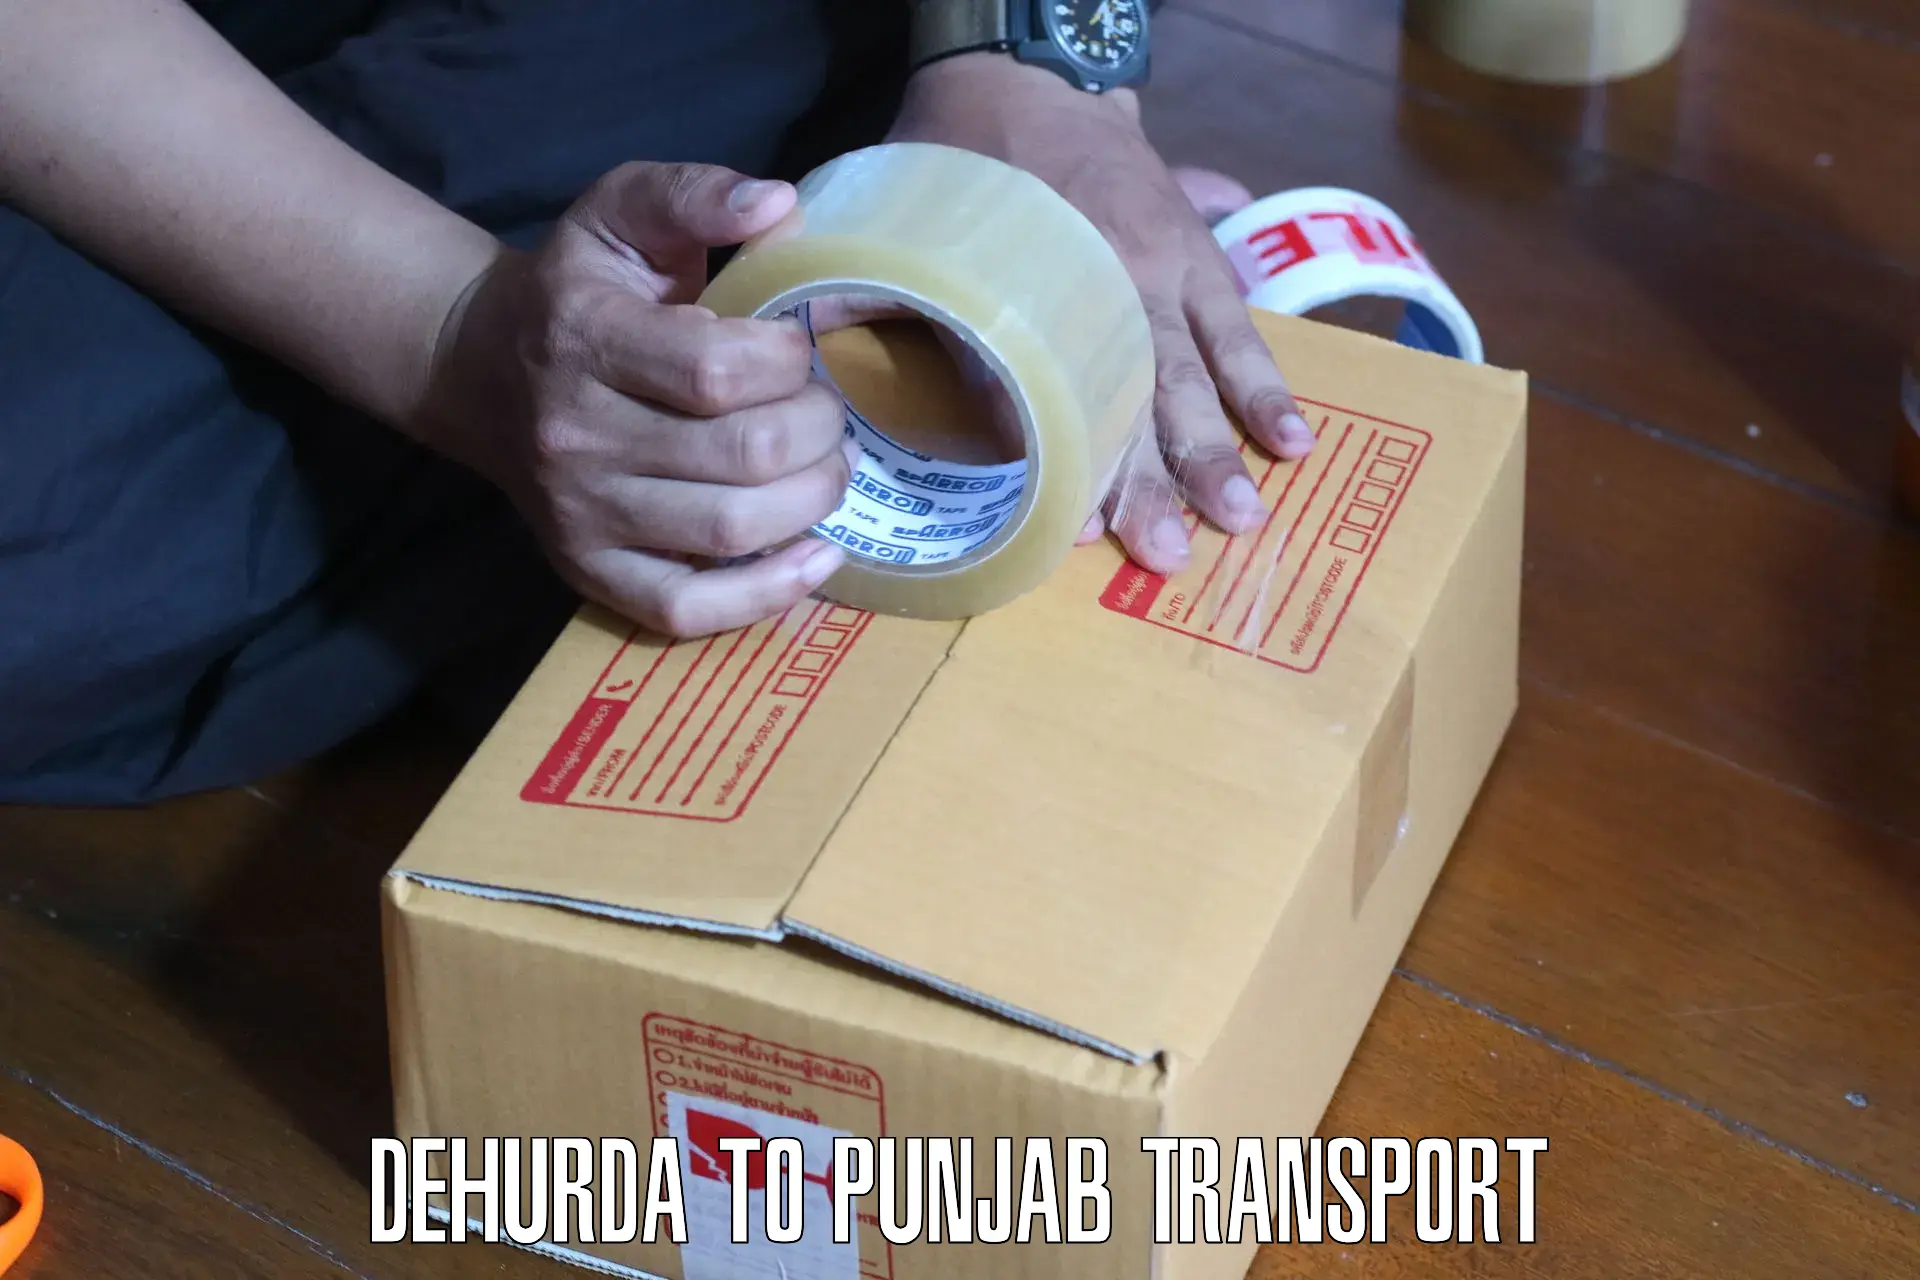 Transport shared services in Dehurda to Beas